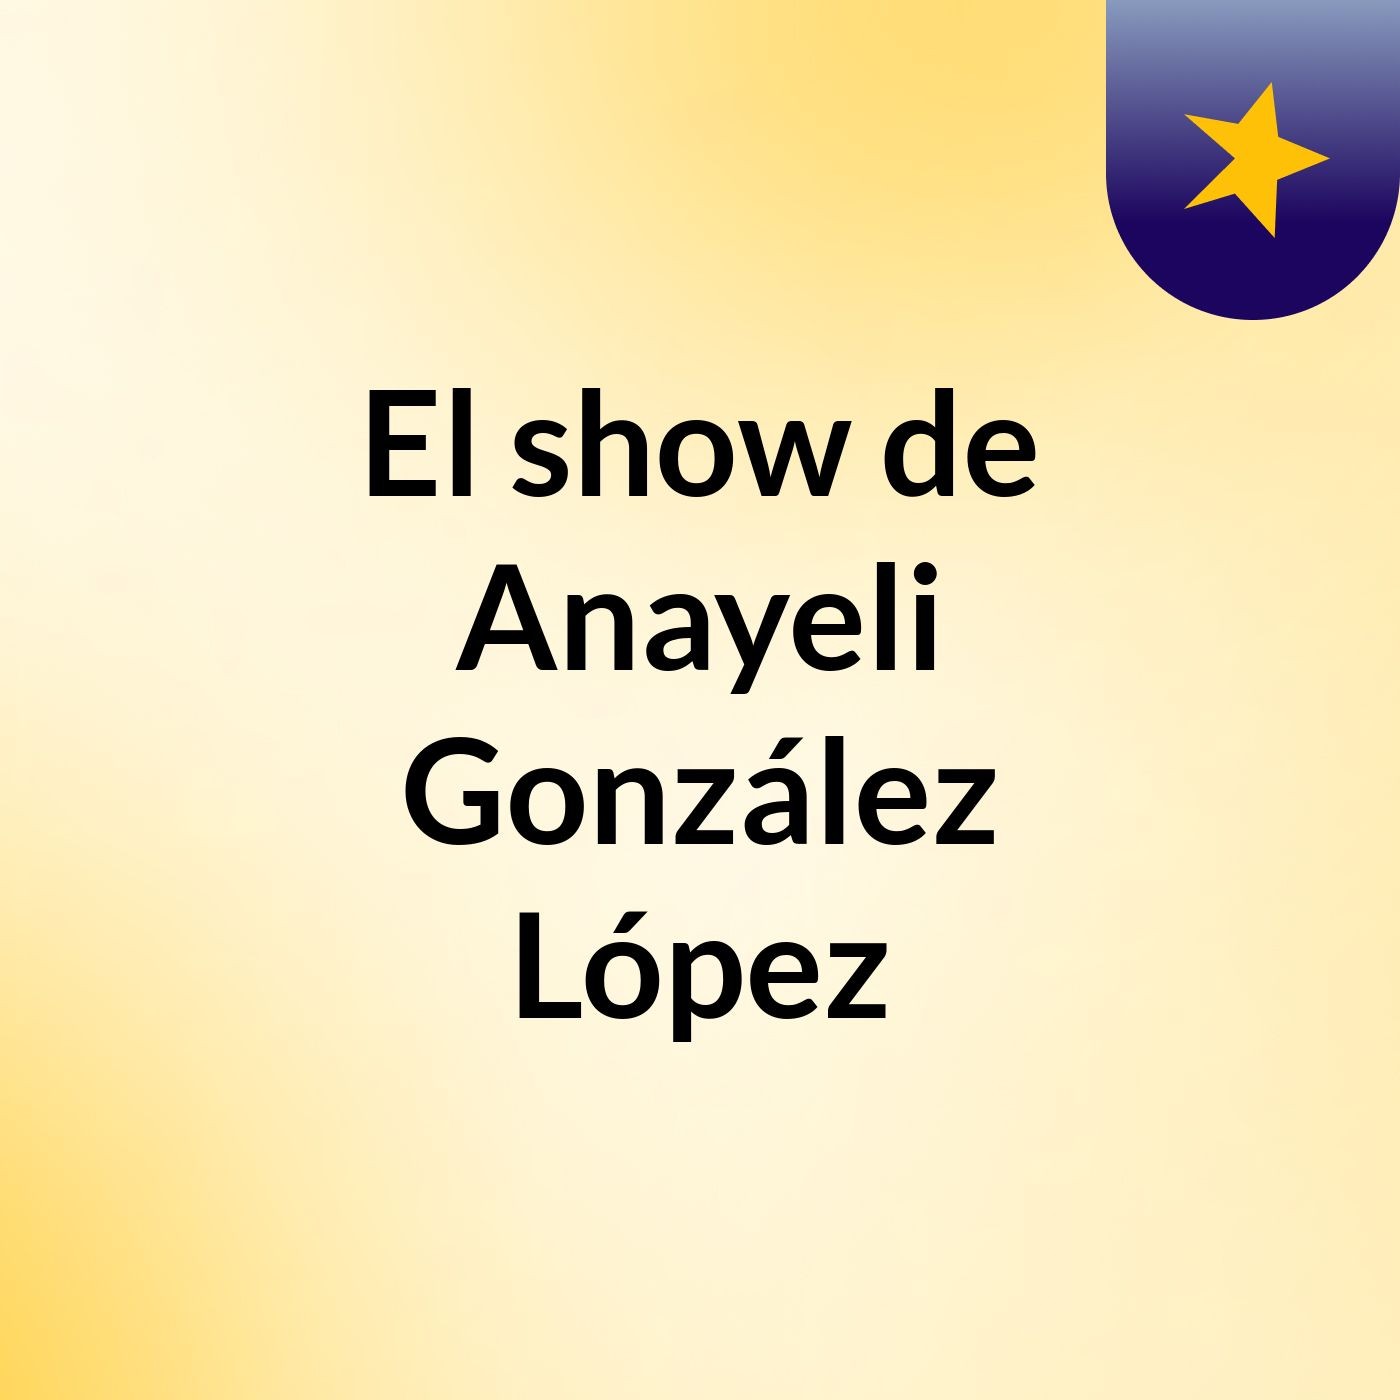 El show de Anayeli González López